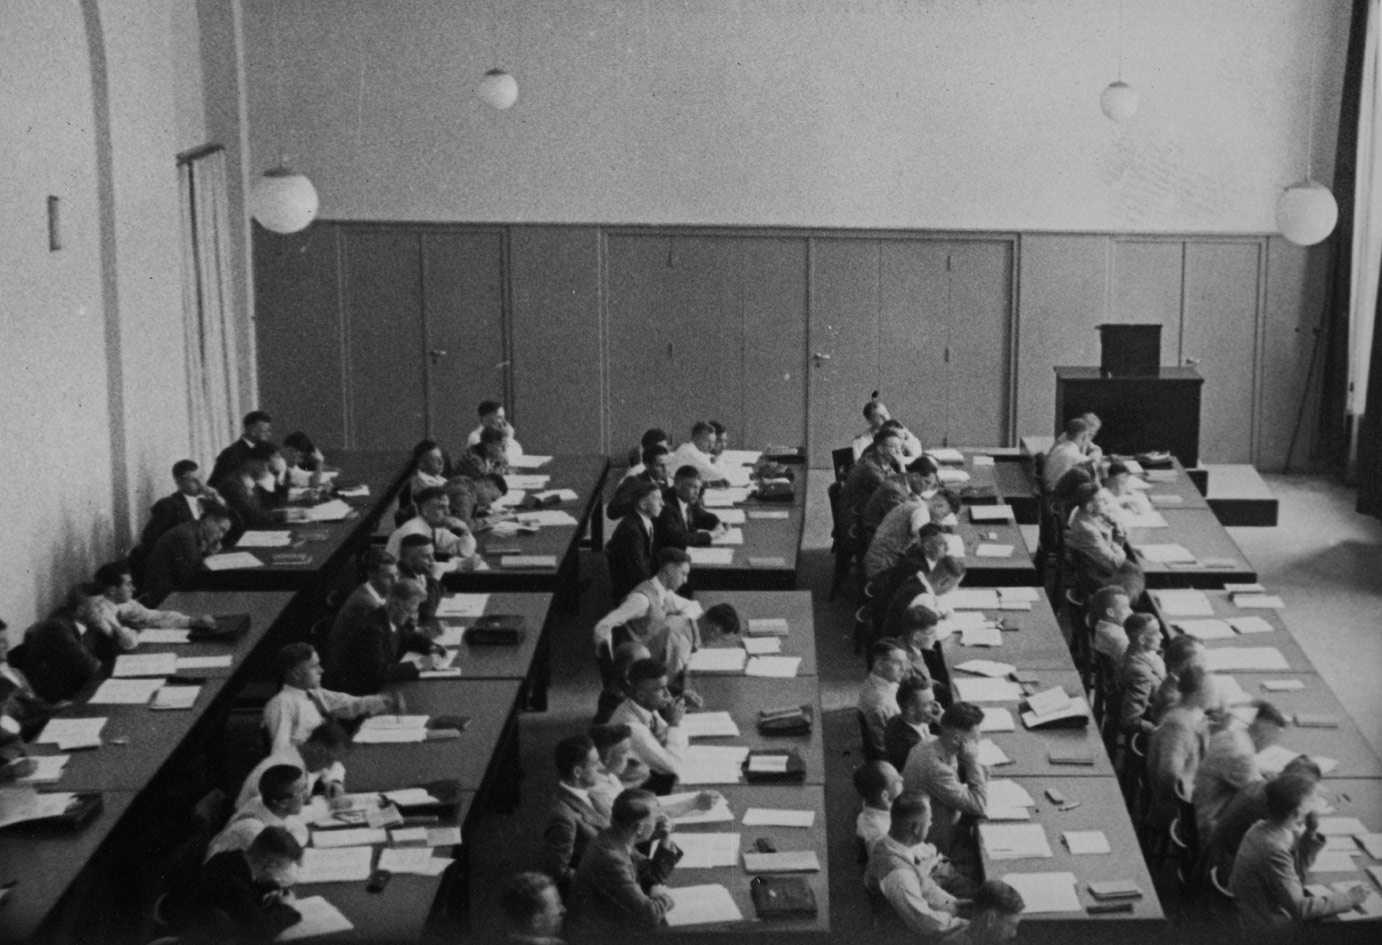 Dr. H classroom. November 1938